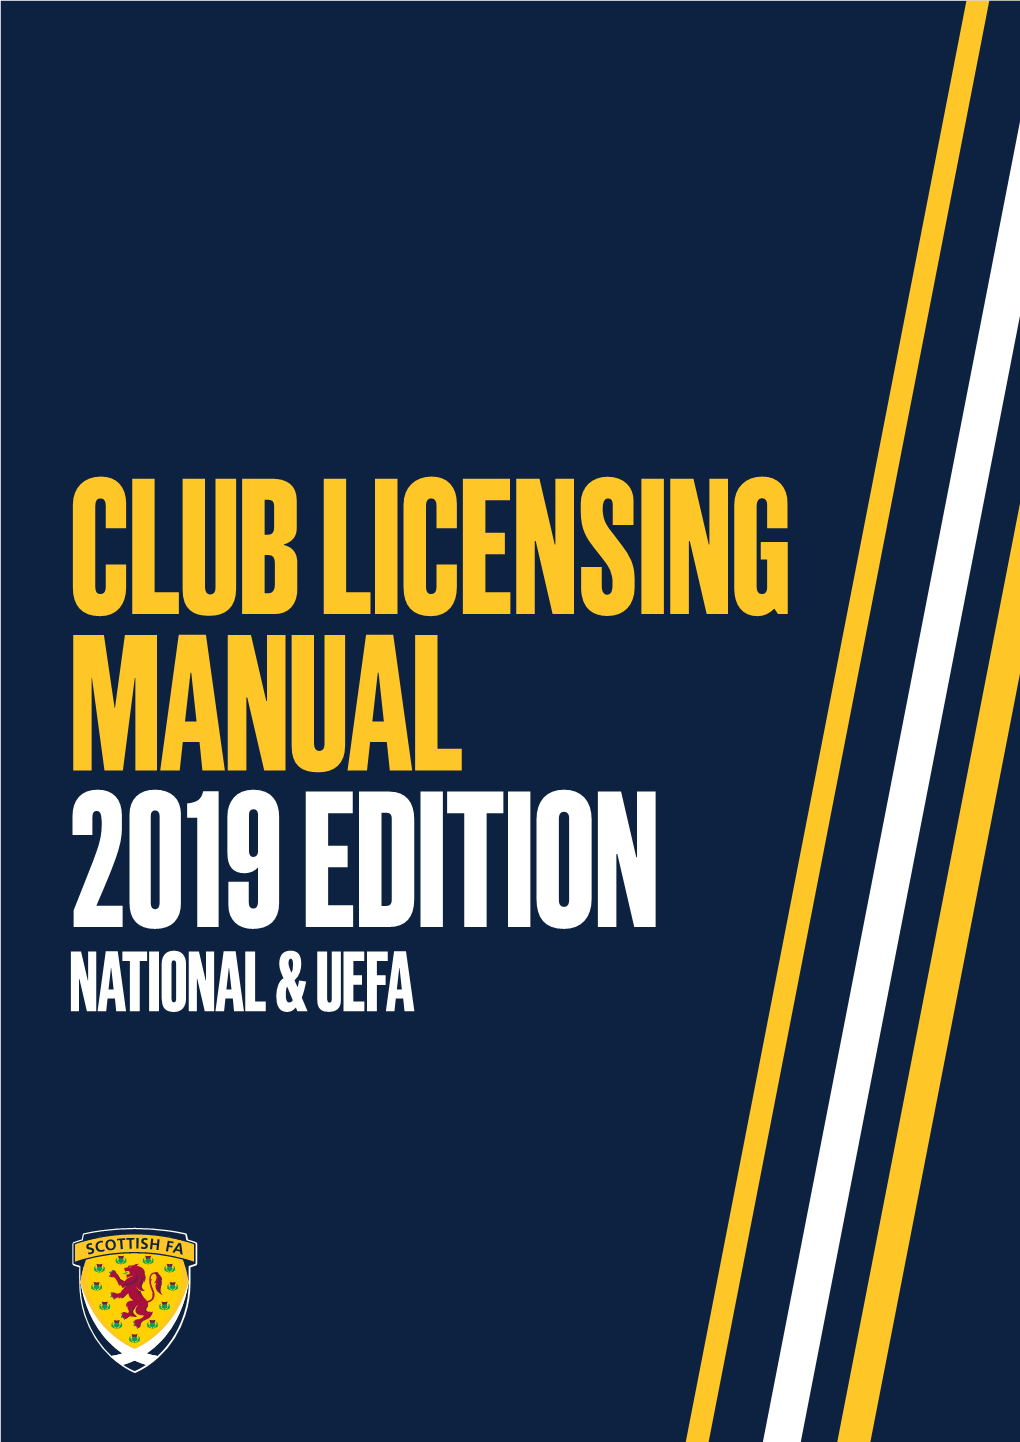 The Scottish FA Club Licensing Manual